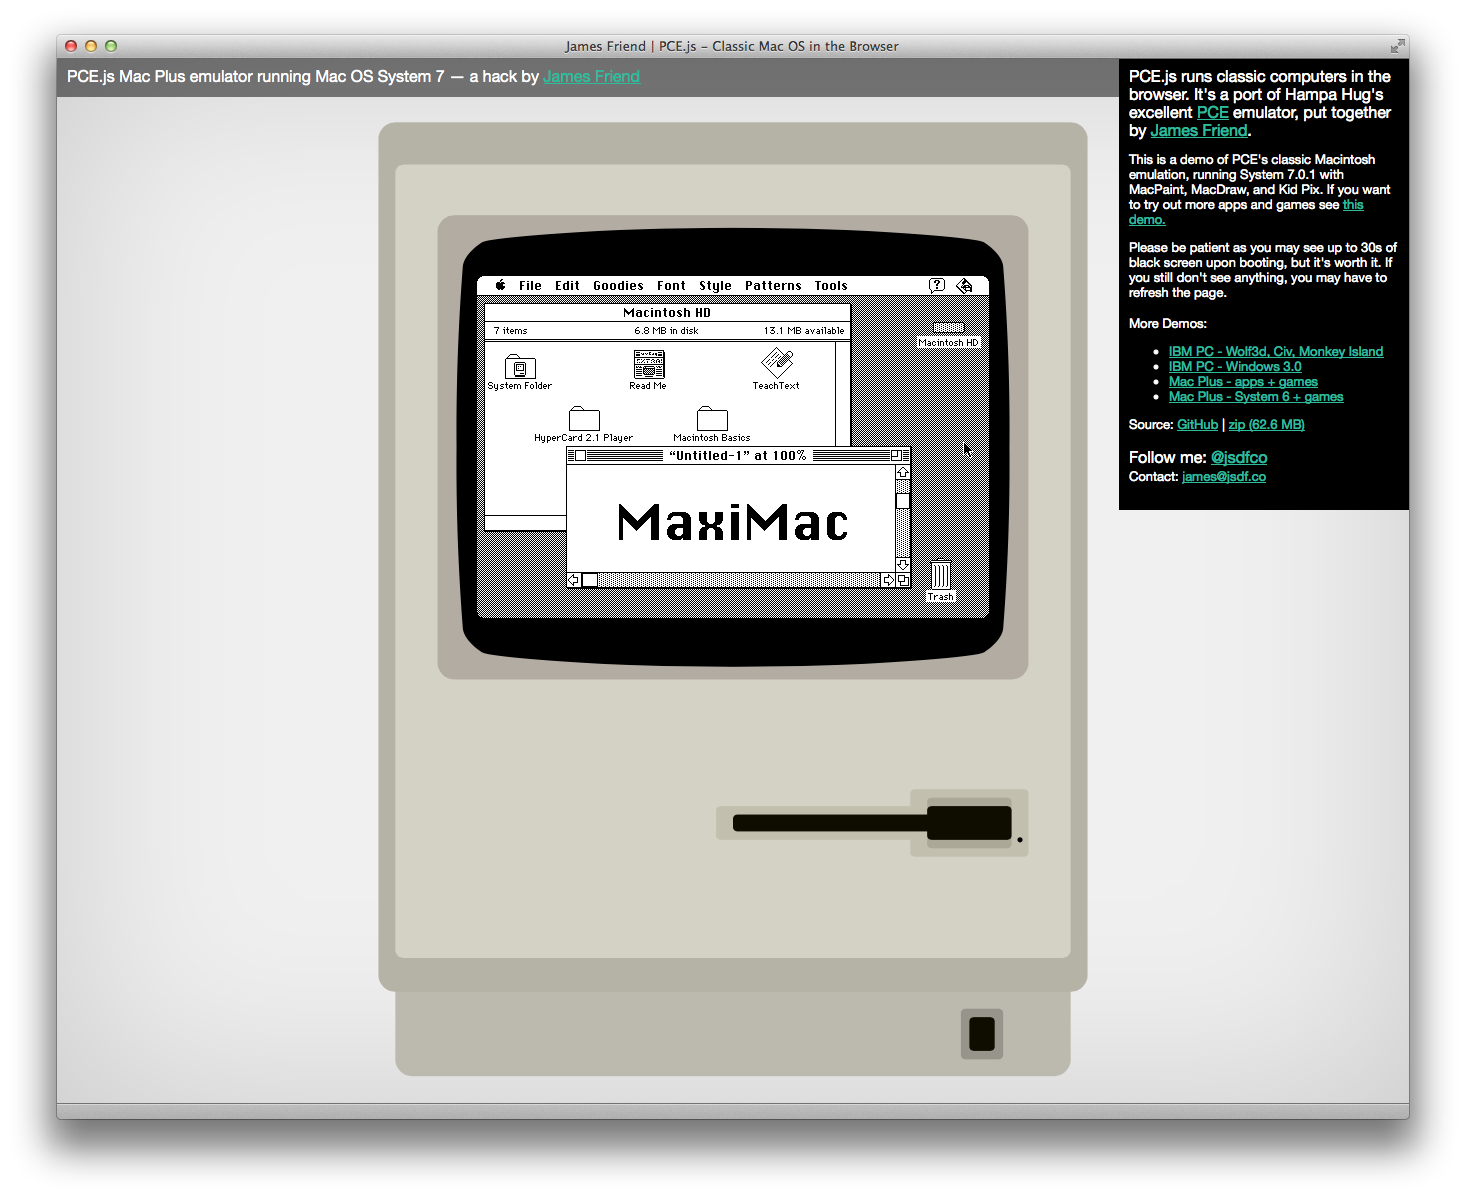 Mac Plus emulator